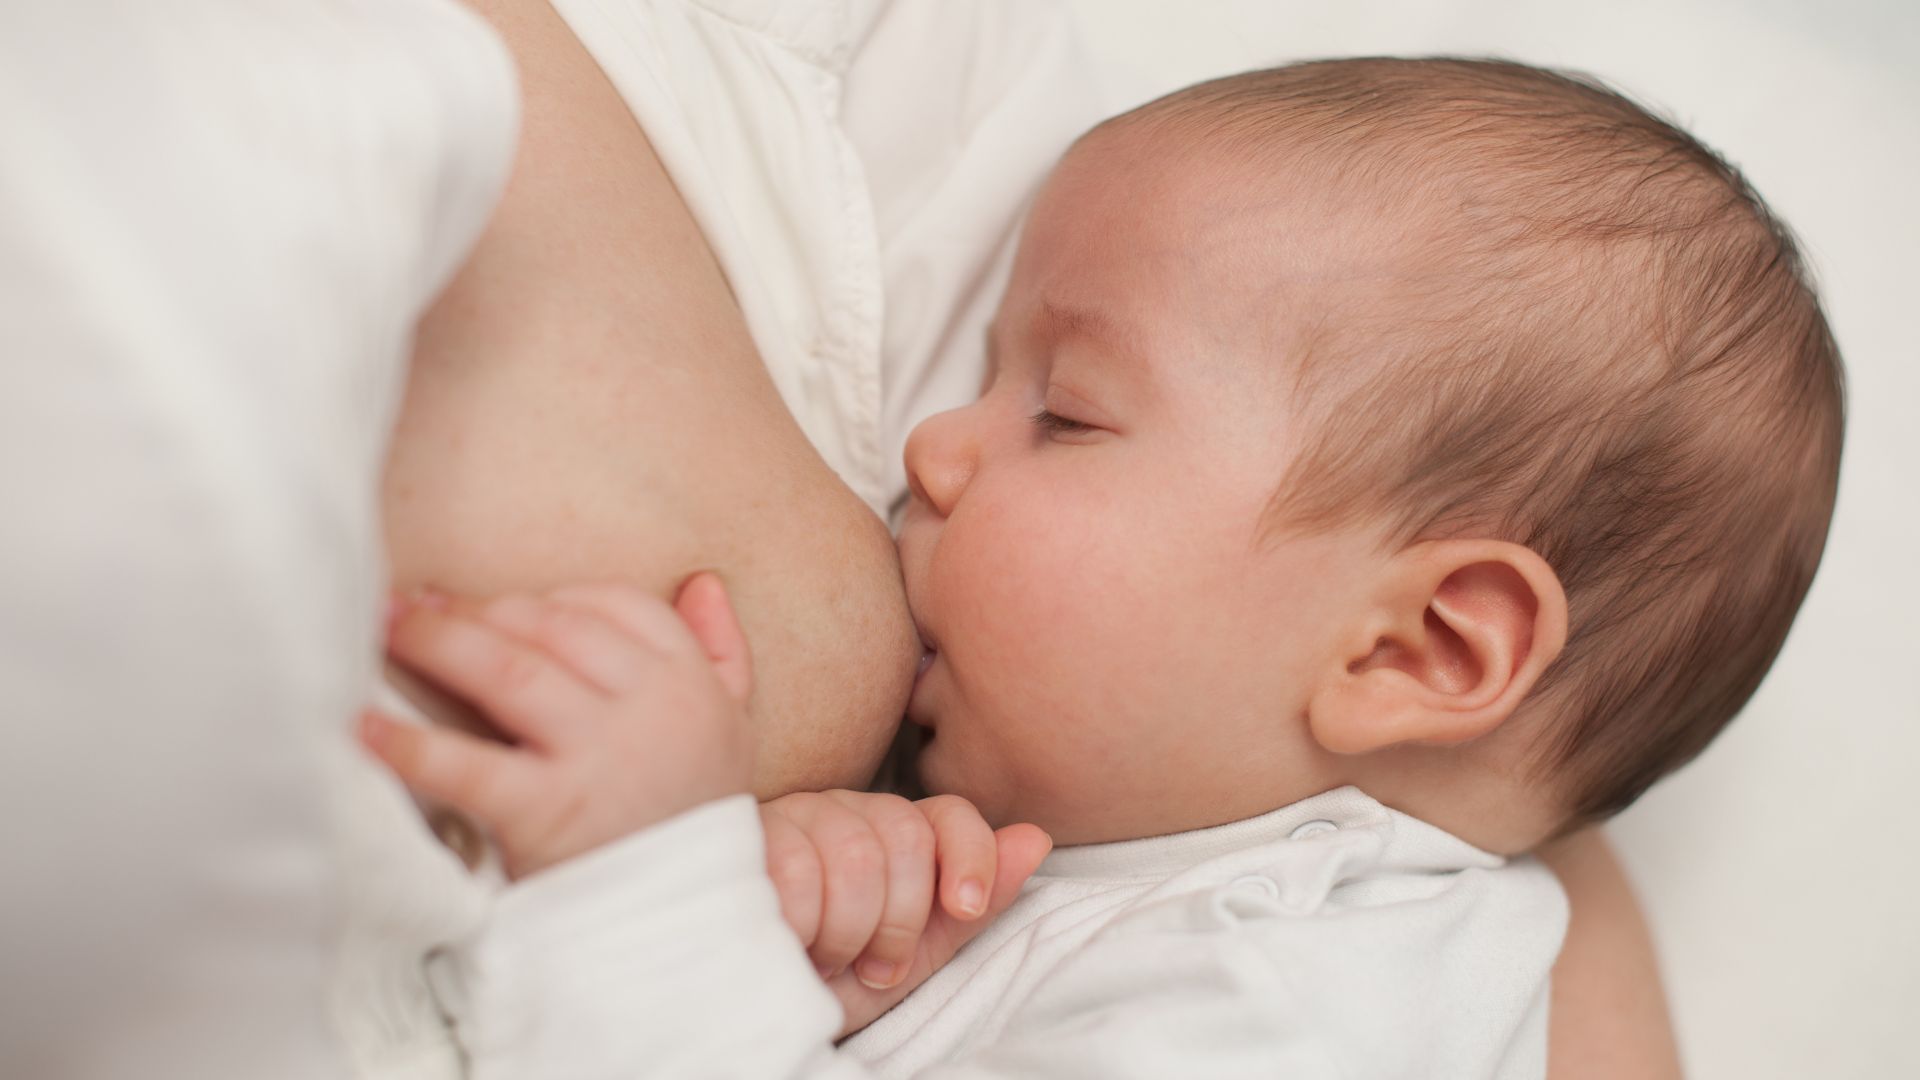 Breastfeeding & bottle feeding